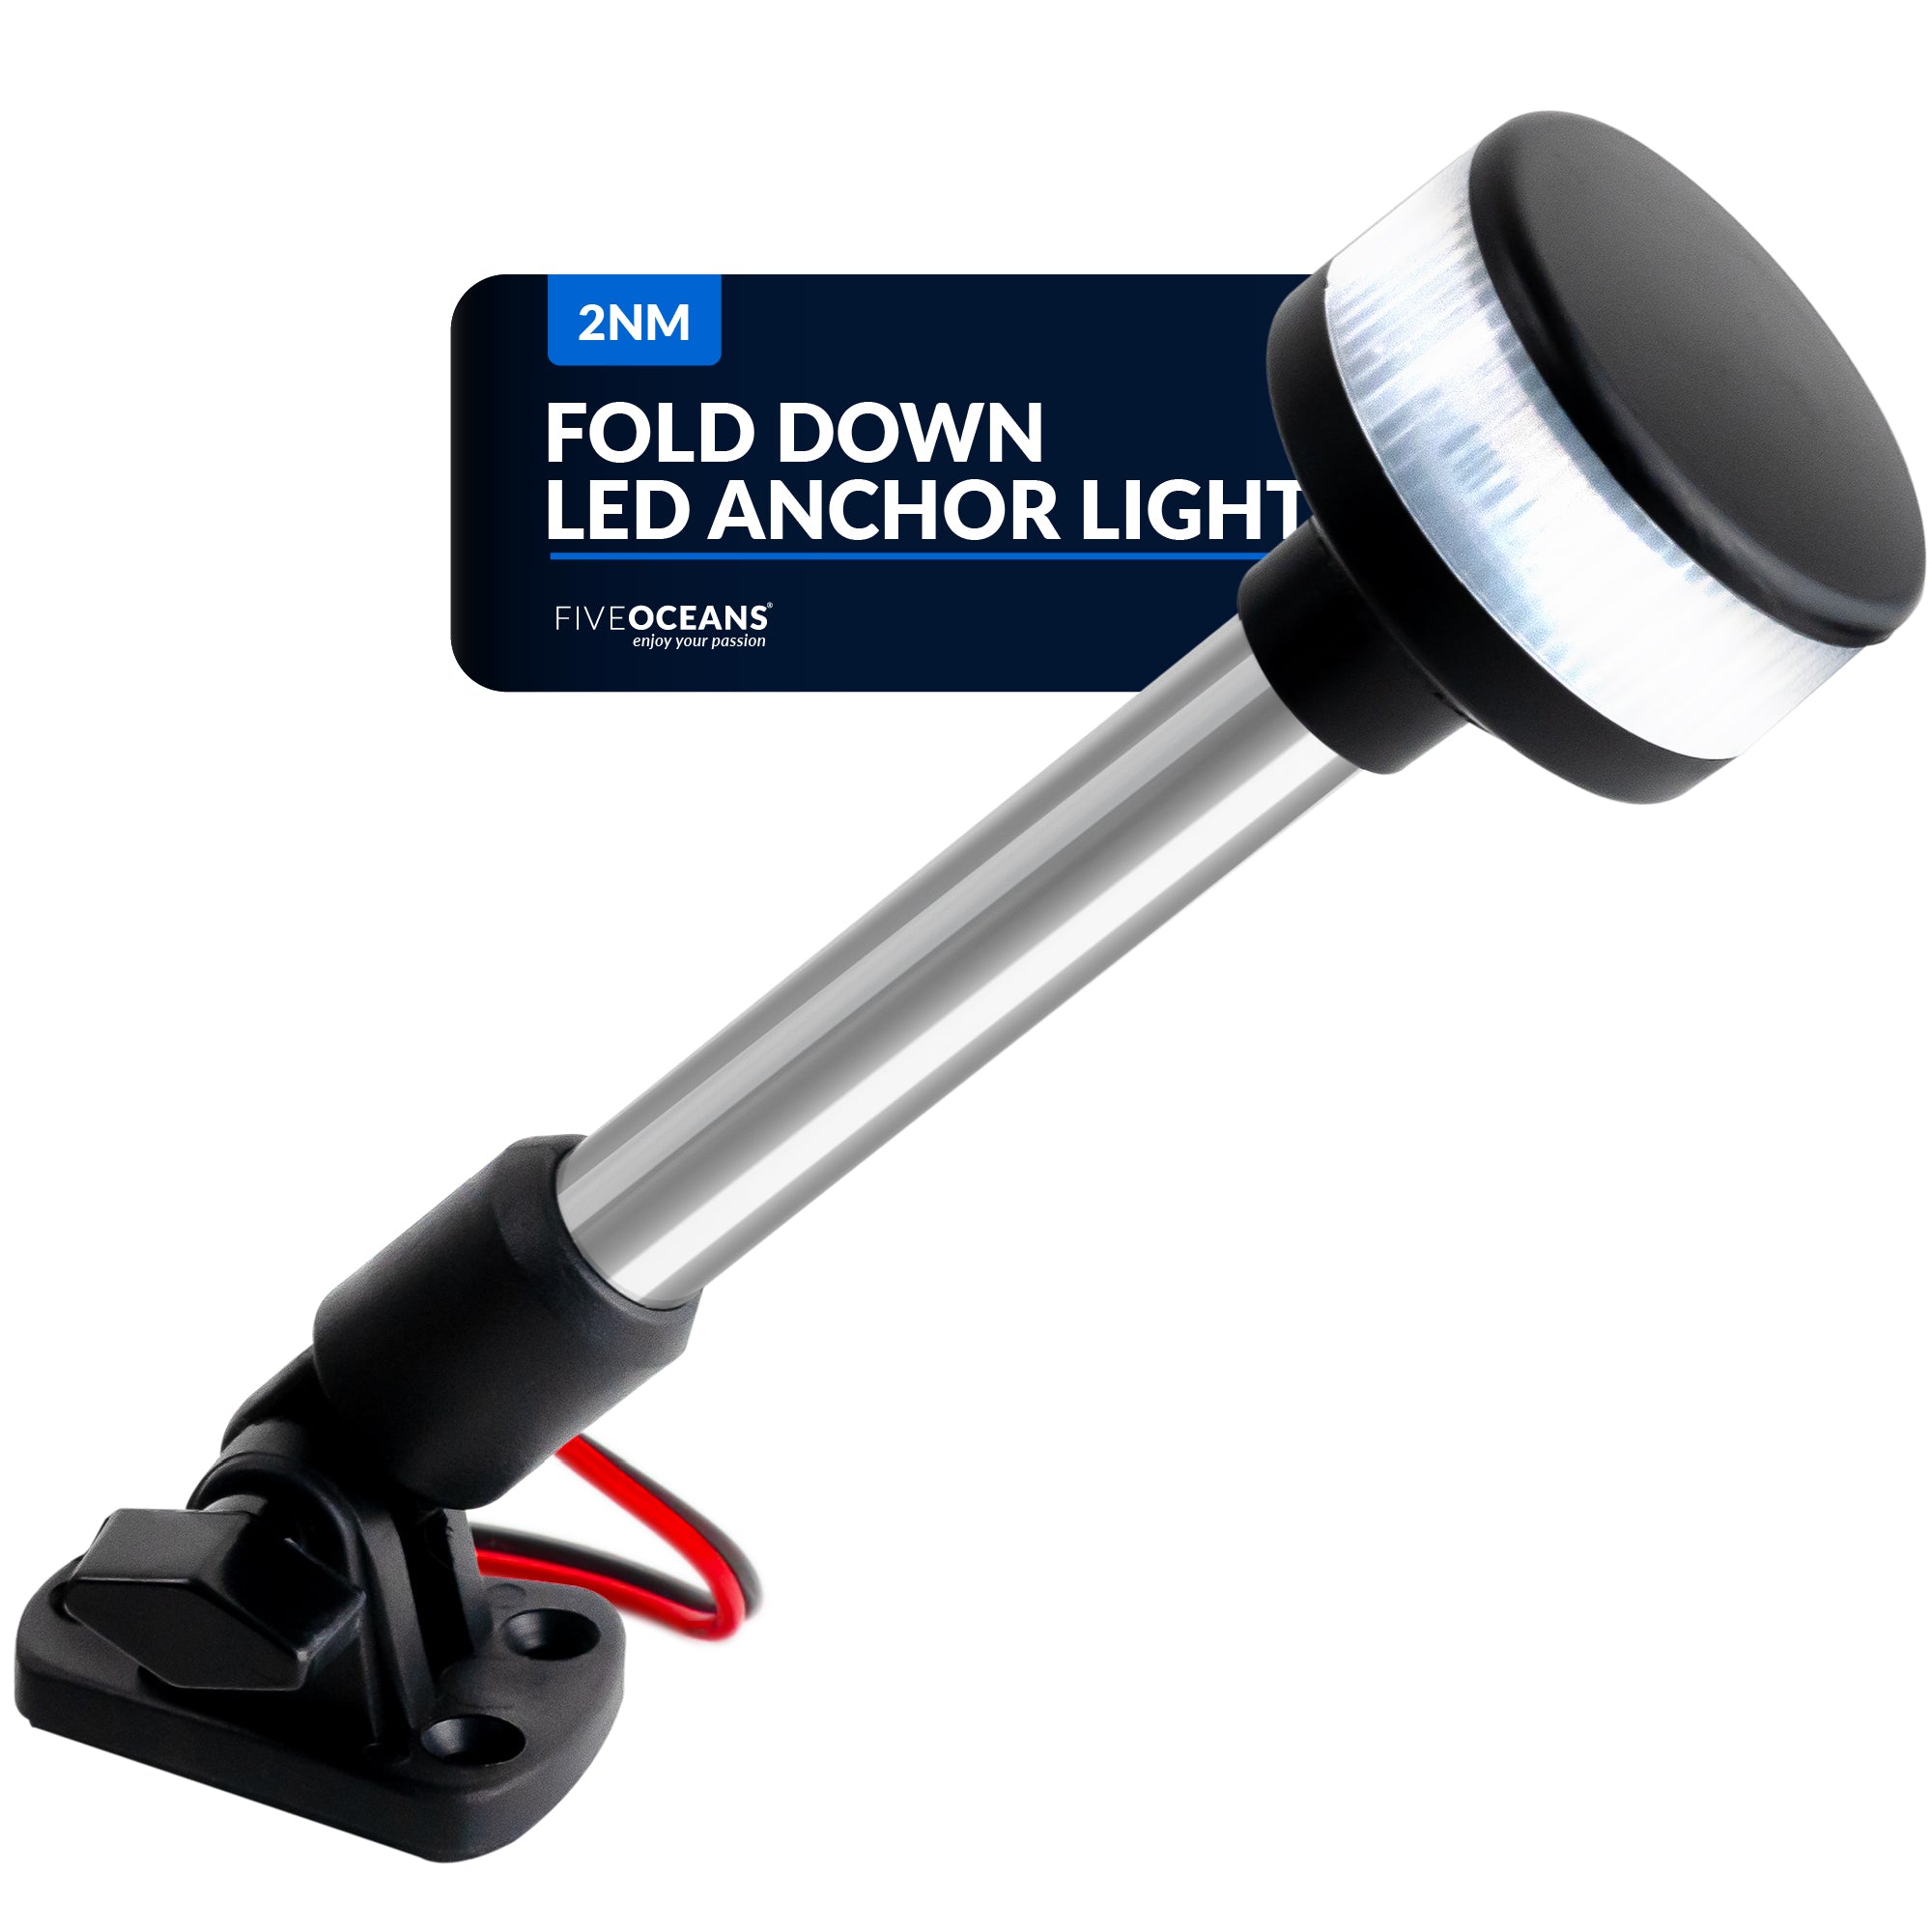 LED Anchor Navigation Light 9", Fold Down, 2NM - FO2878